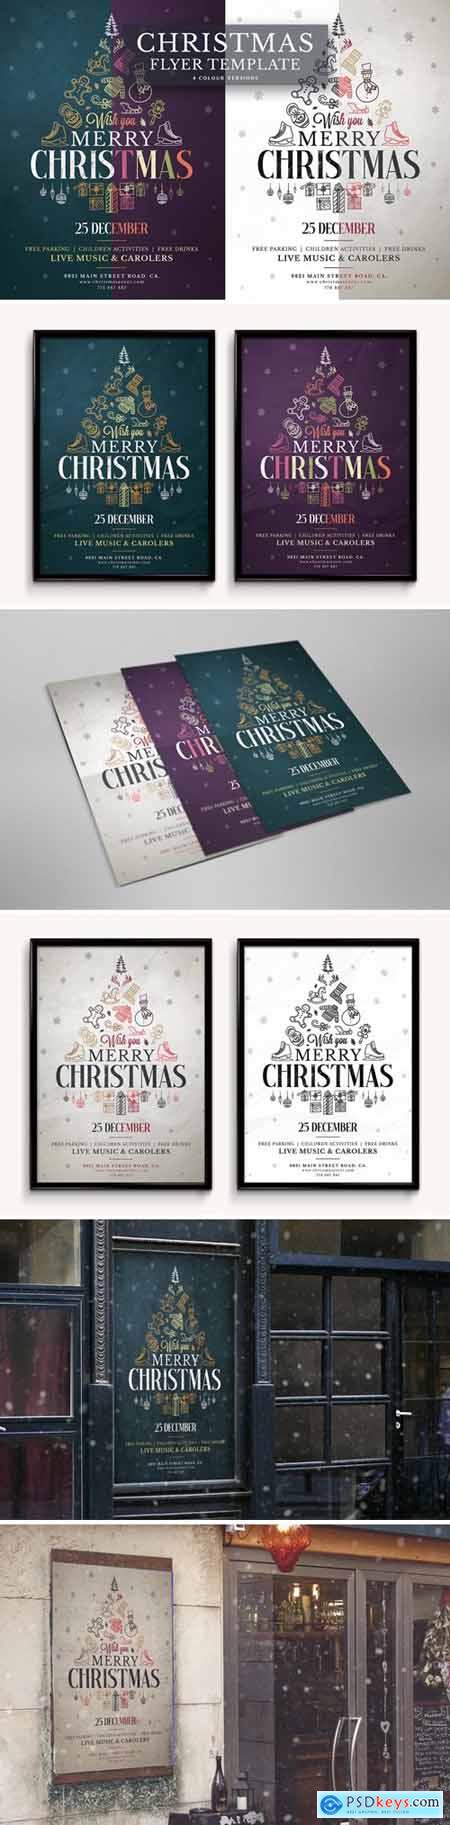 Christmas Flyer Template Vol5 4313587